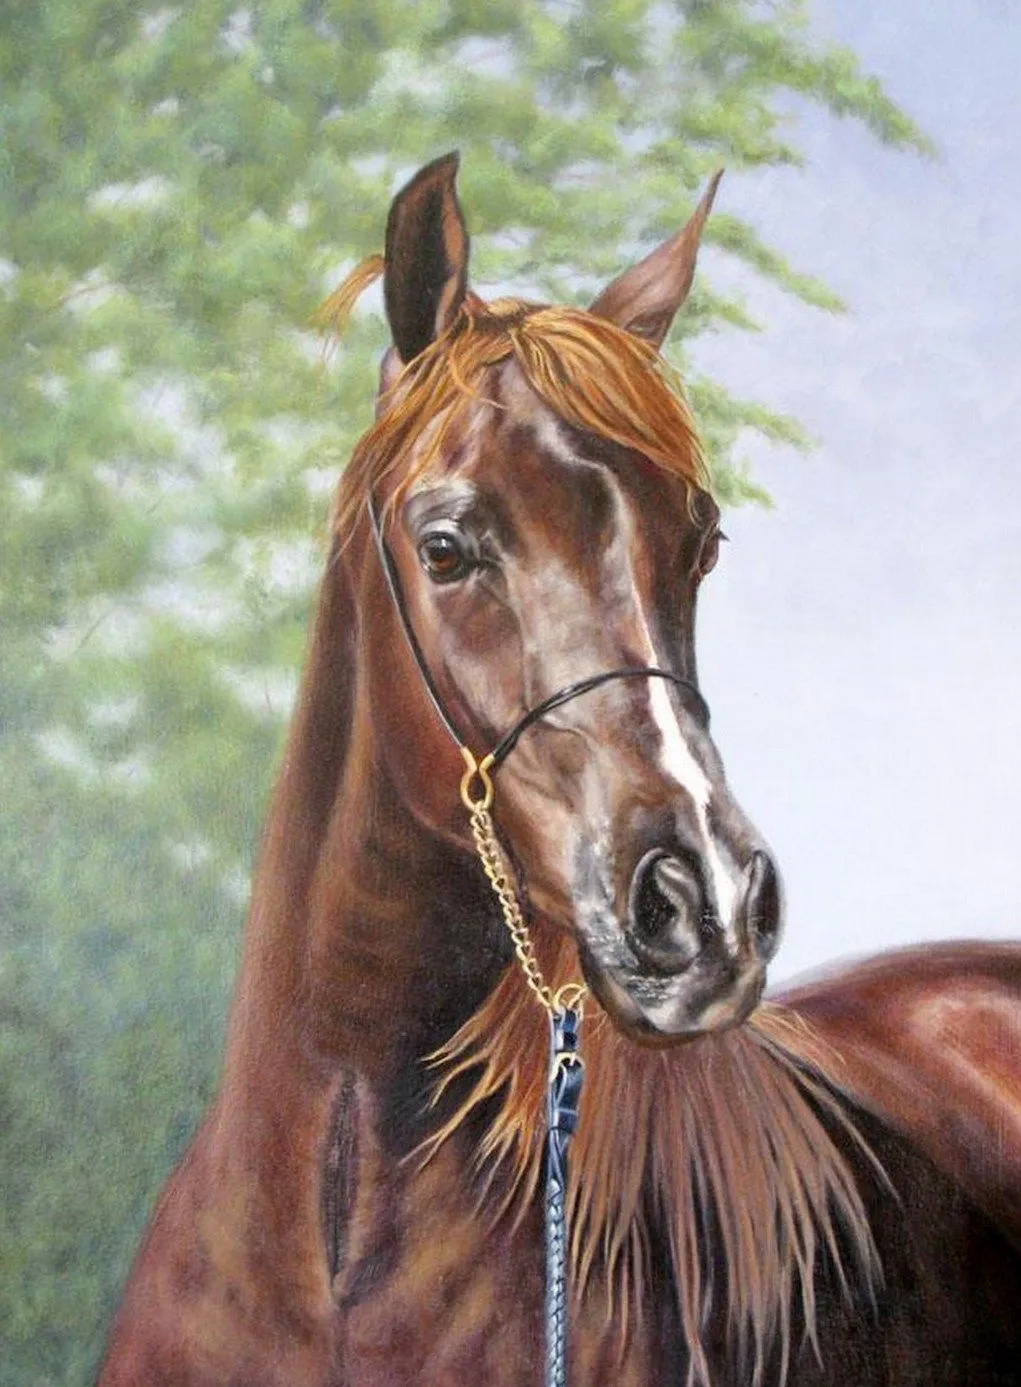 Pintura Moderna al Óleo: Pinturas realistas de caballos